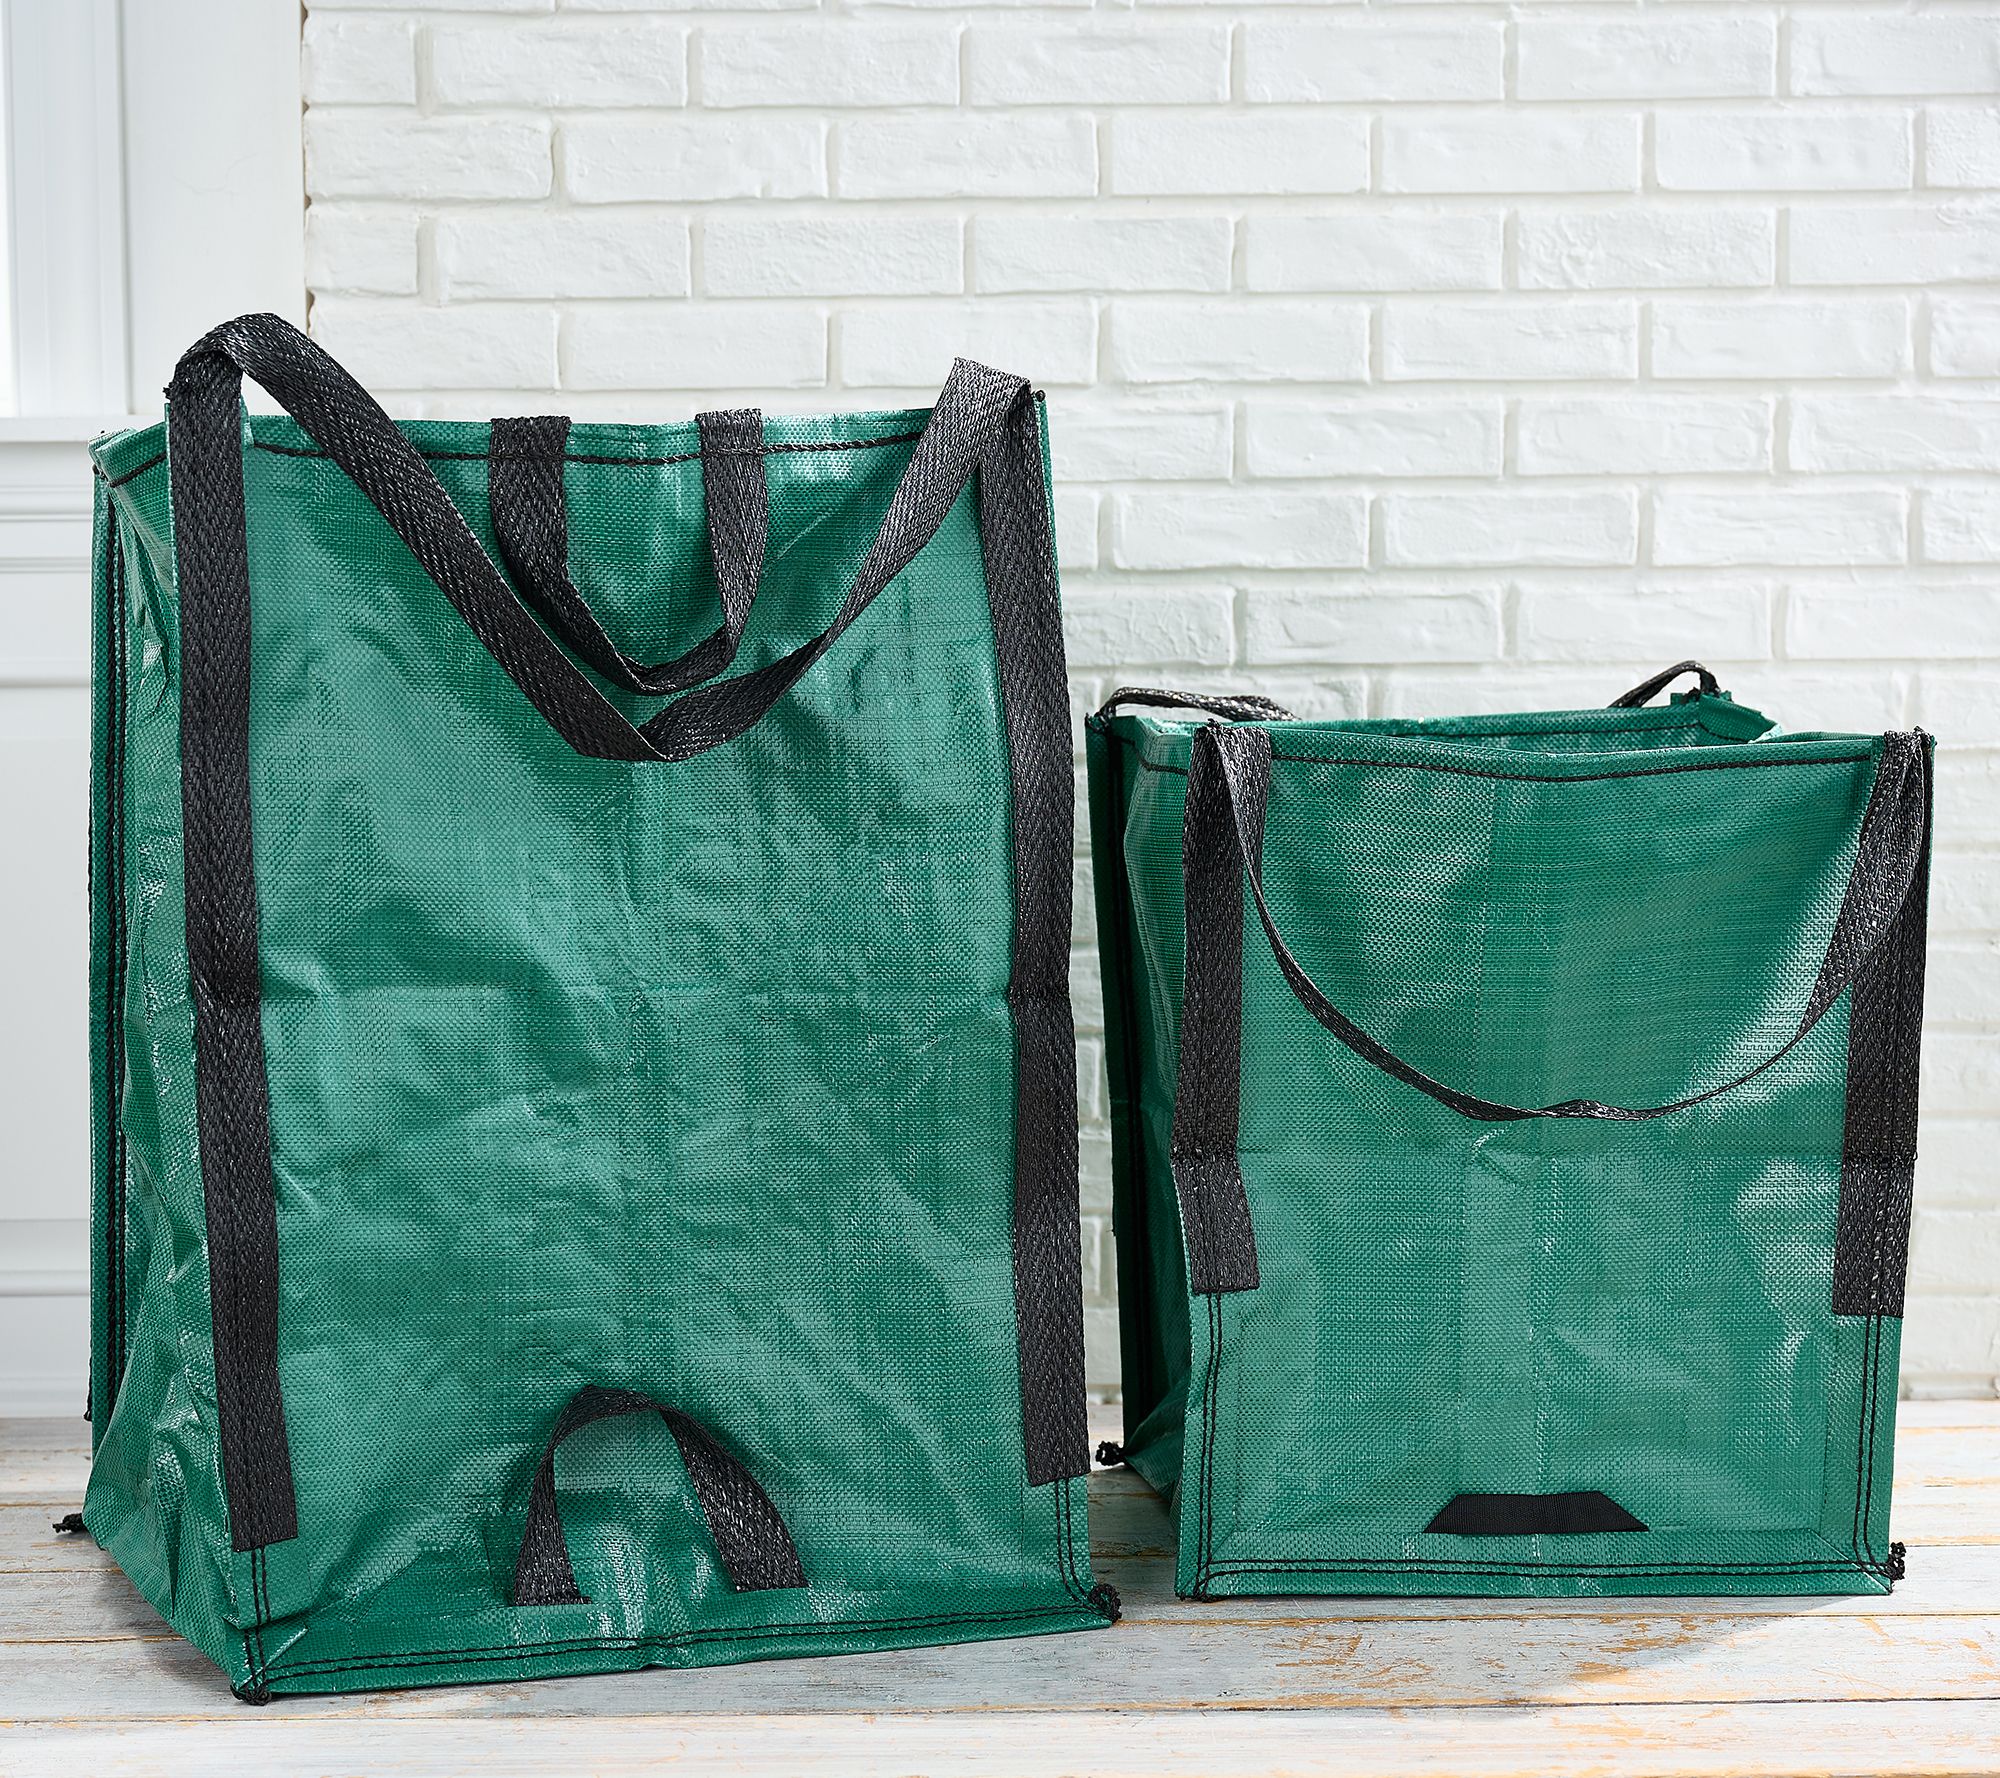 DuraSack - Heavy-Duty, Tear-Resistant, Reusable Bags